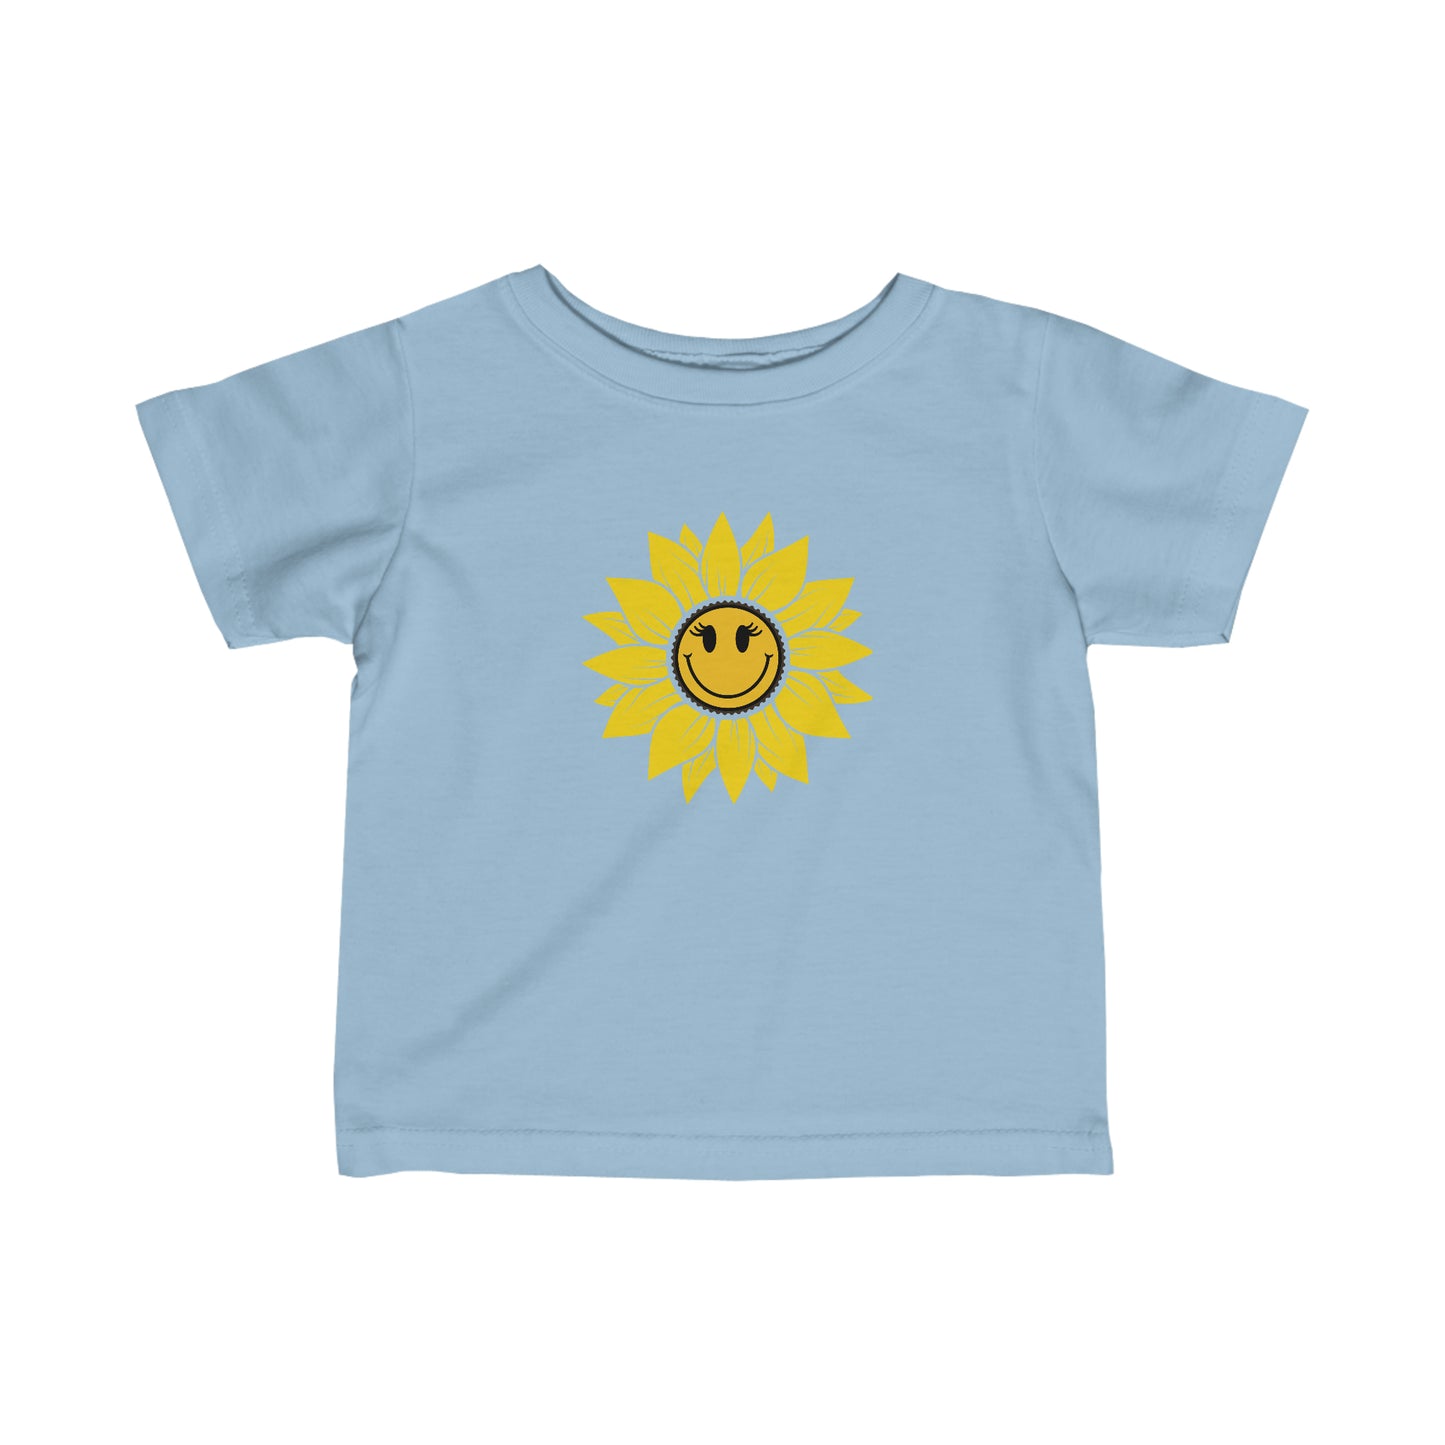 Positive, Sunflower, Nature, Gardens, Flowers, Garden- Baby, Infant, Toddler, T-shirt